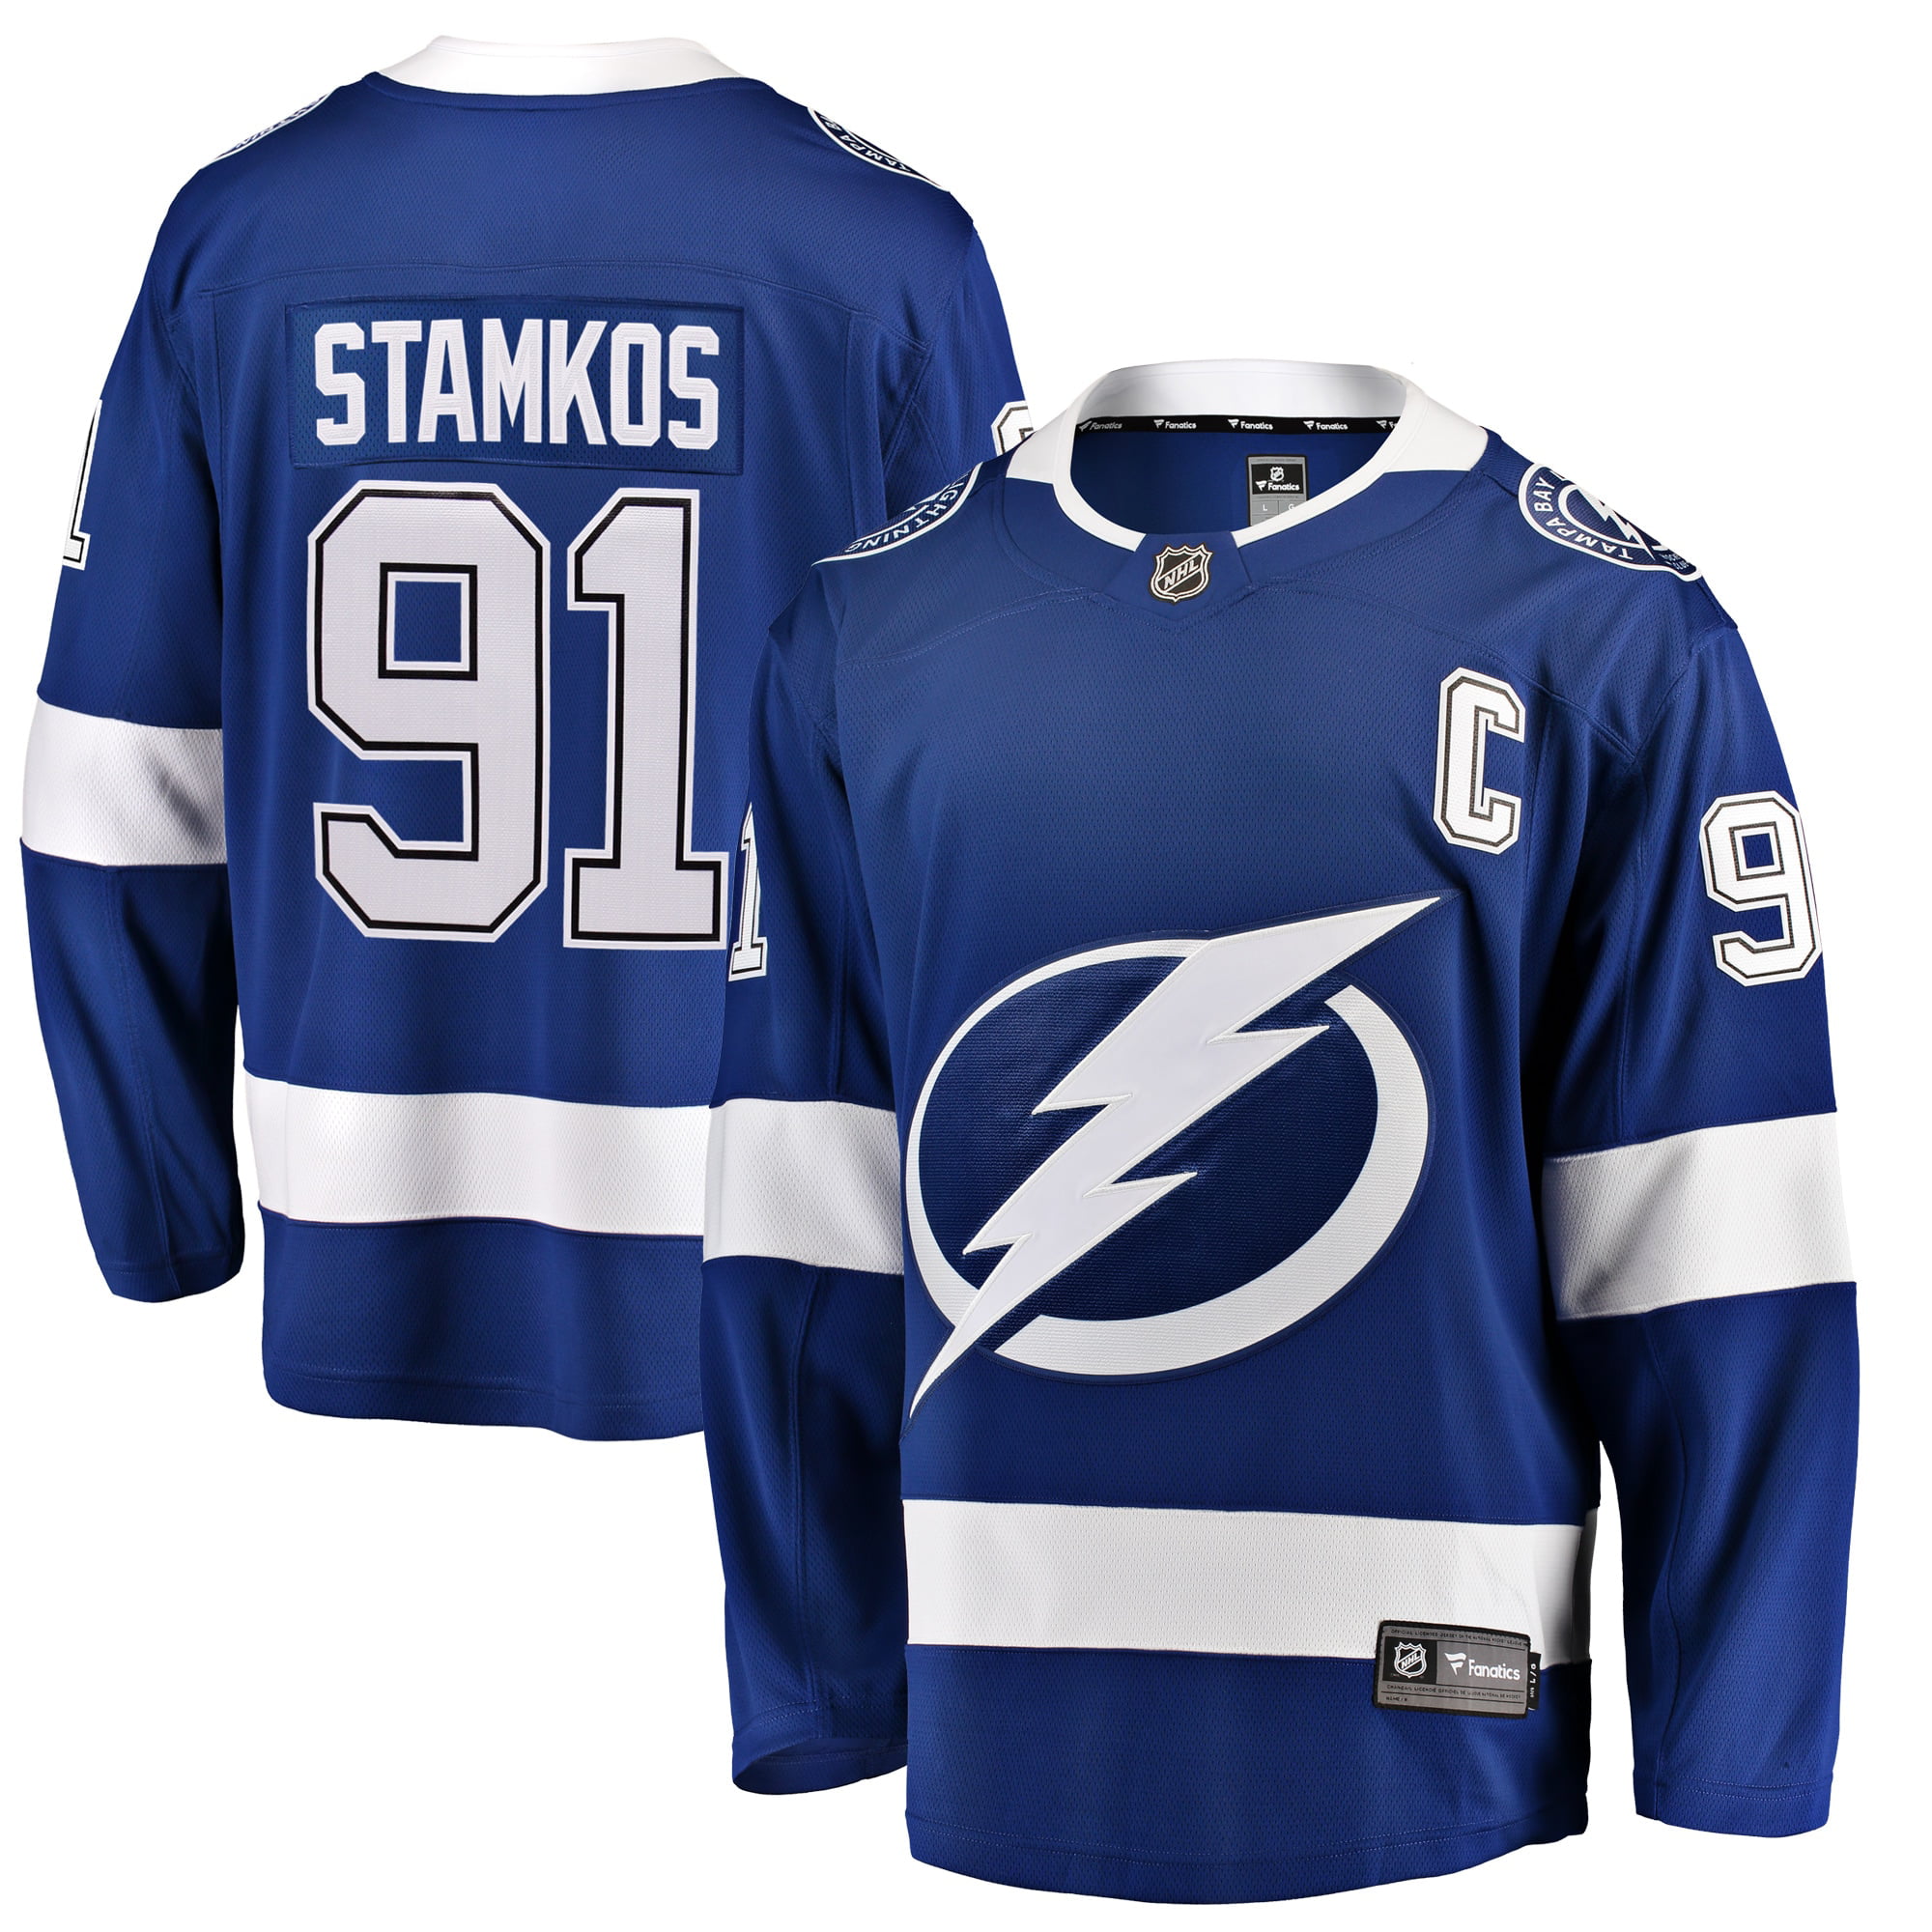 Fanatics - Steven Stamkos Tampa Bay Lightning Fanatics Branded Youth Home Breakaway ...